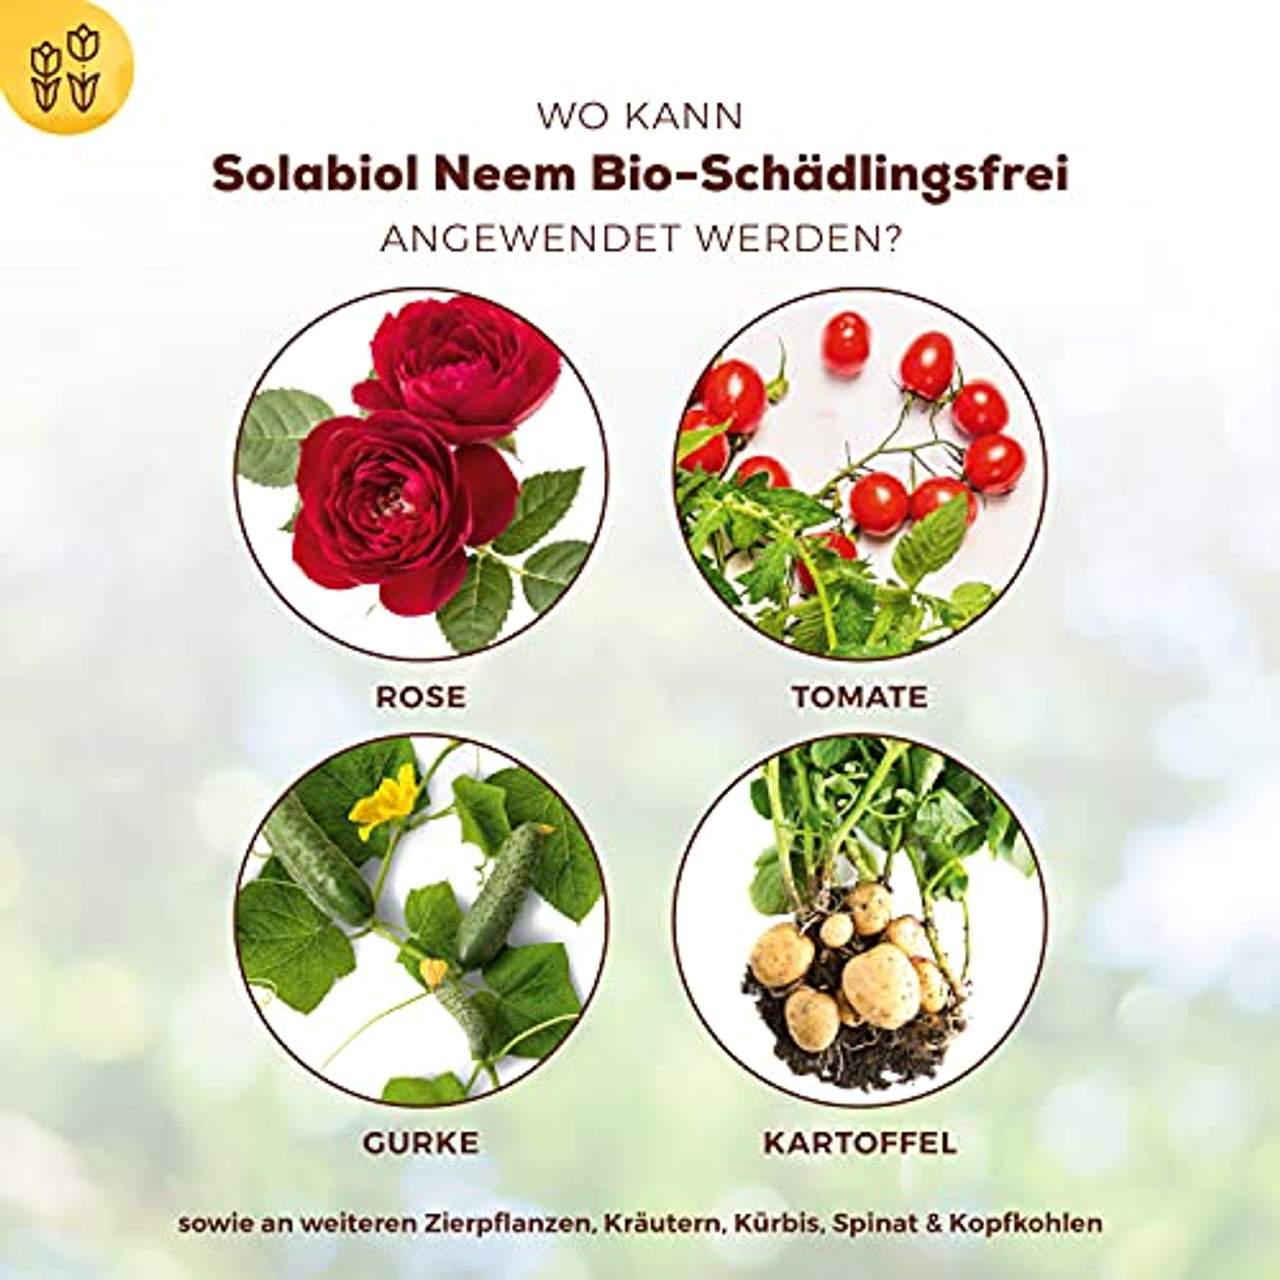 Solabiol Neem Bio-Schädlingsfrei biologische Schädlingsbekämpfung an Zierpflanzen